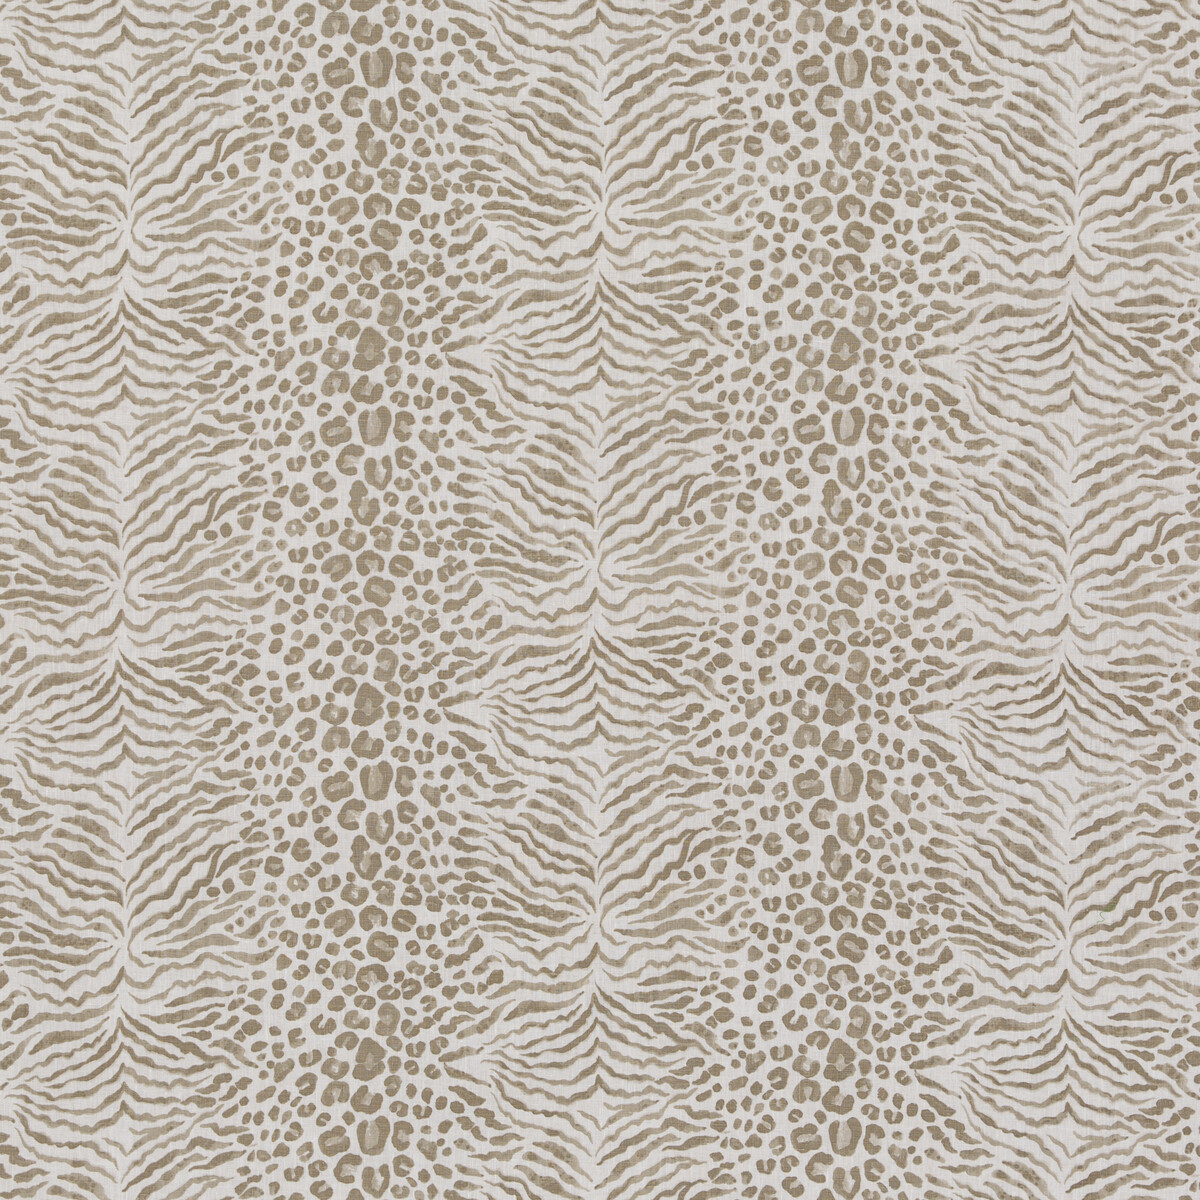 G P & J Baker Bp10952.850.0 Chatto Multipurpose Fabric in Bronze/Brown/White